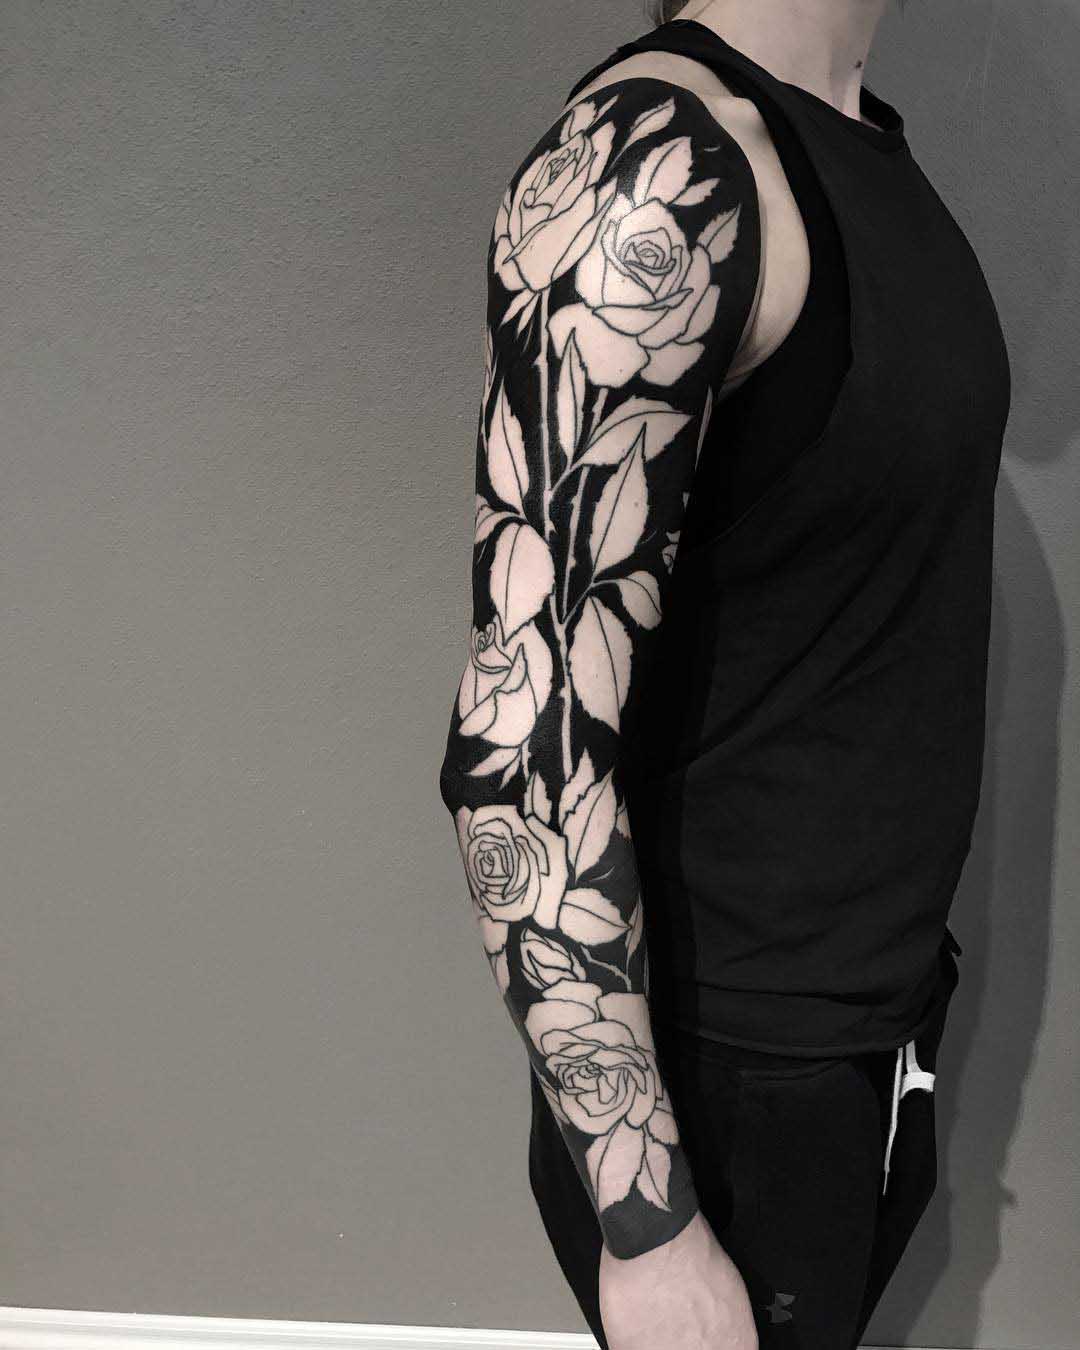 tattoo sleeve blackwork style and roses